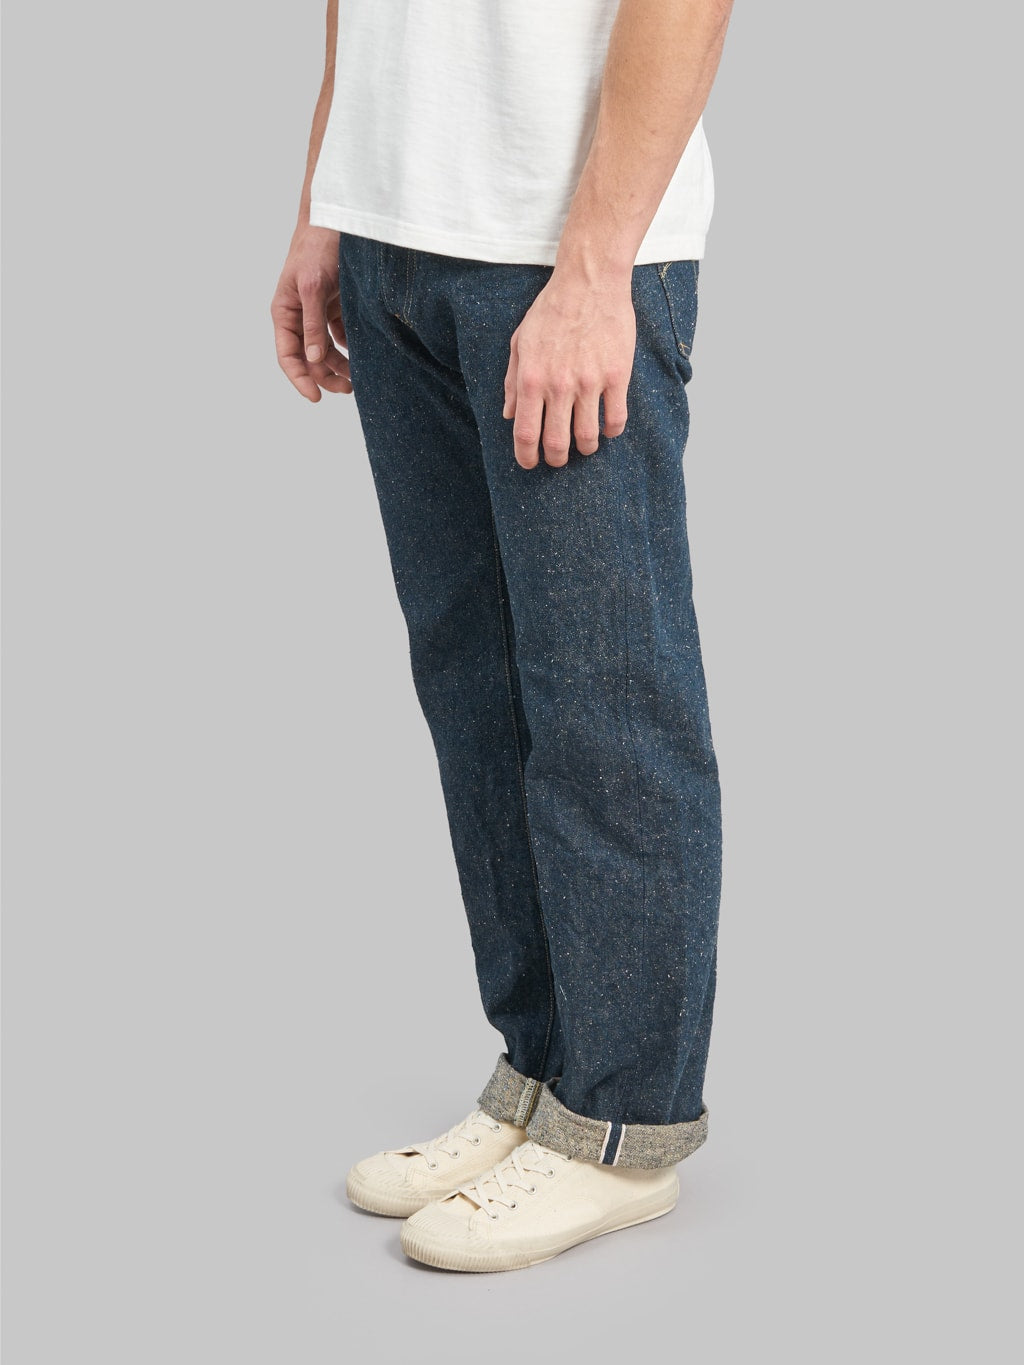 ONI Denim 266-CCD "Crushed Concrete Denim" 14.7oz Relax Straight Jeans